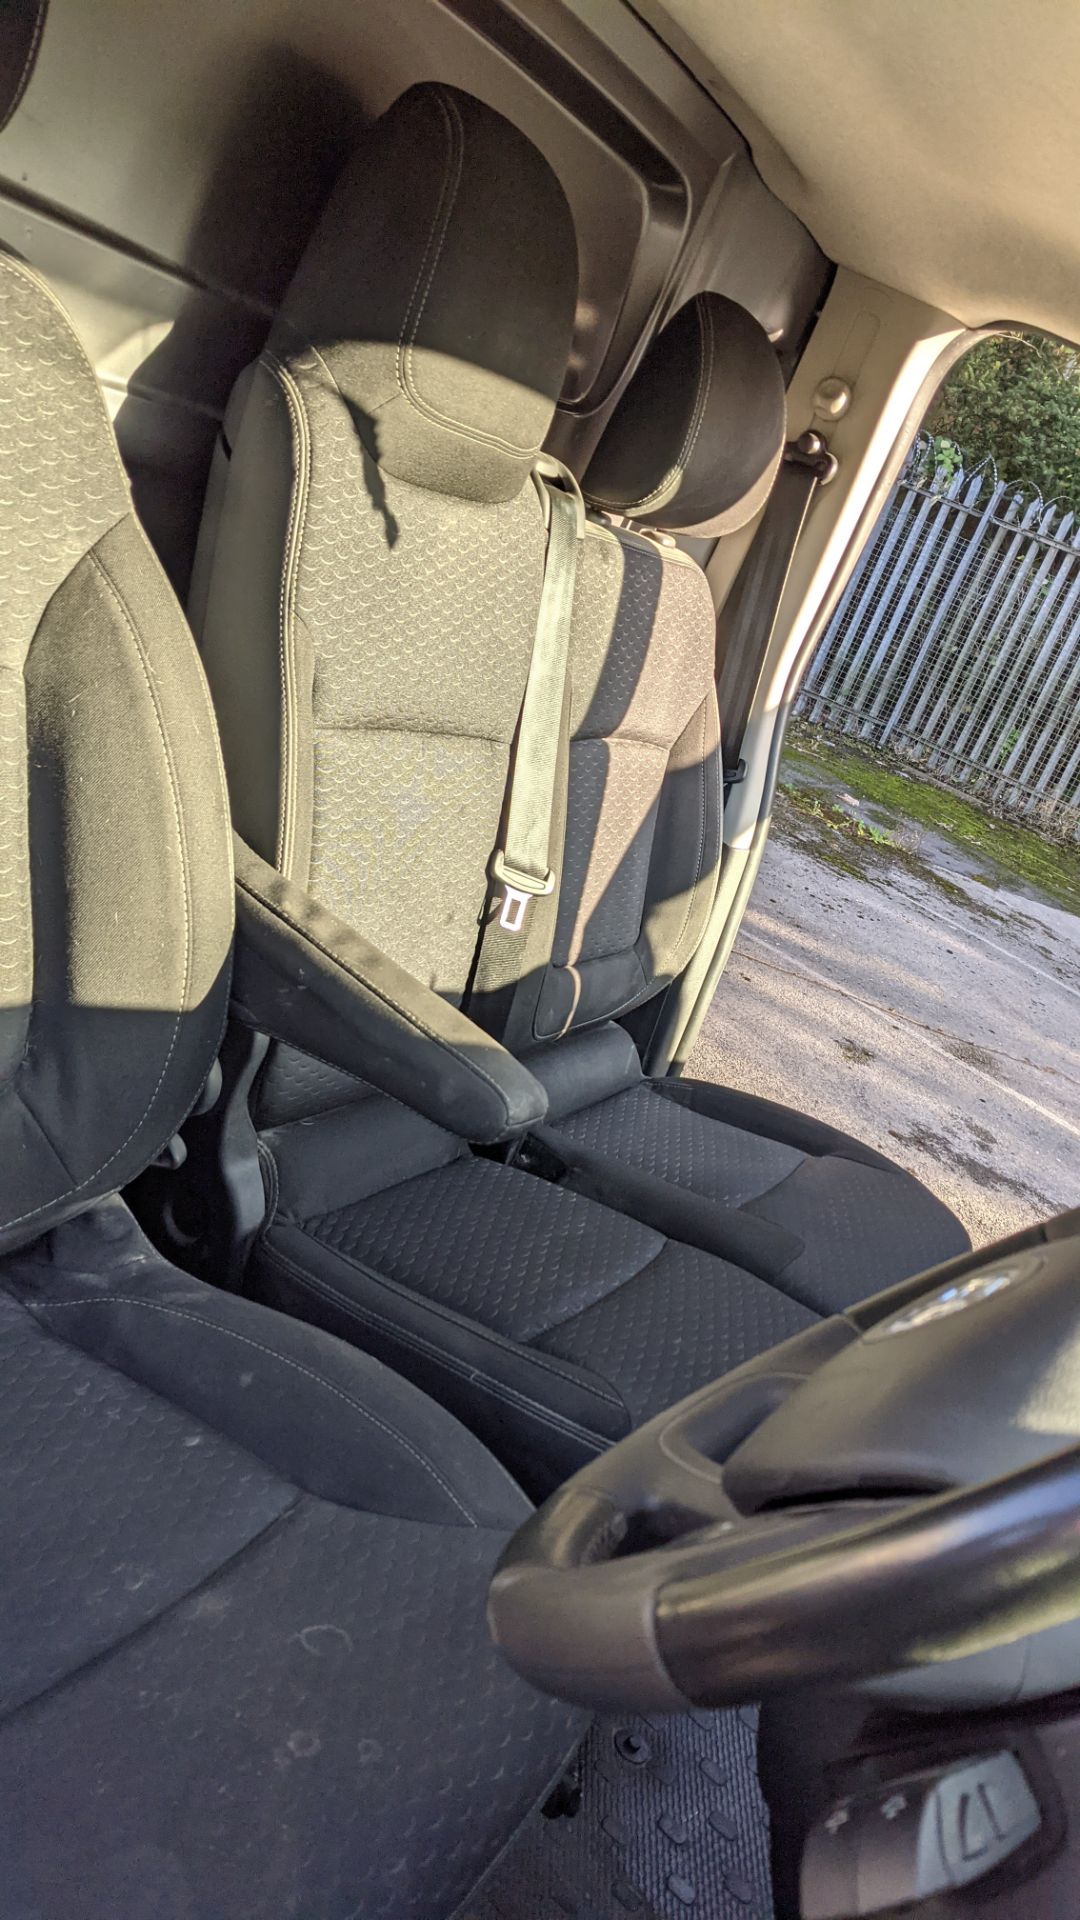 2019 Vauxhall Vivaro L2 2900 Sport CDTI BT SS panel van (Registration FD19 YUB) - Image 50 of 55